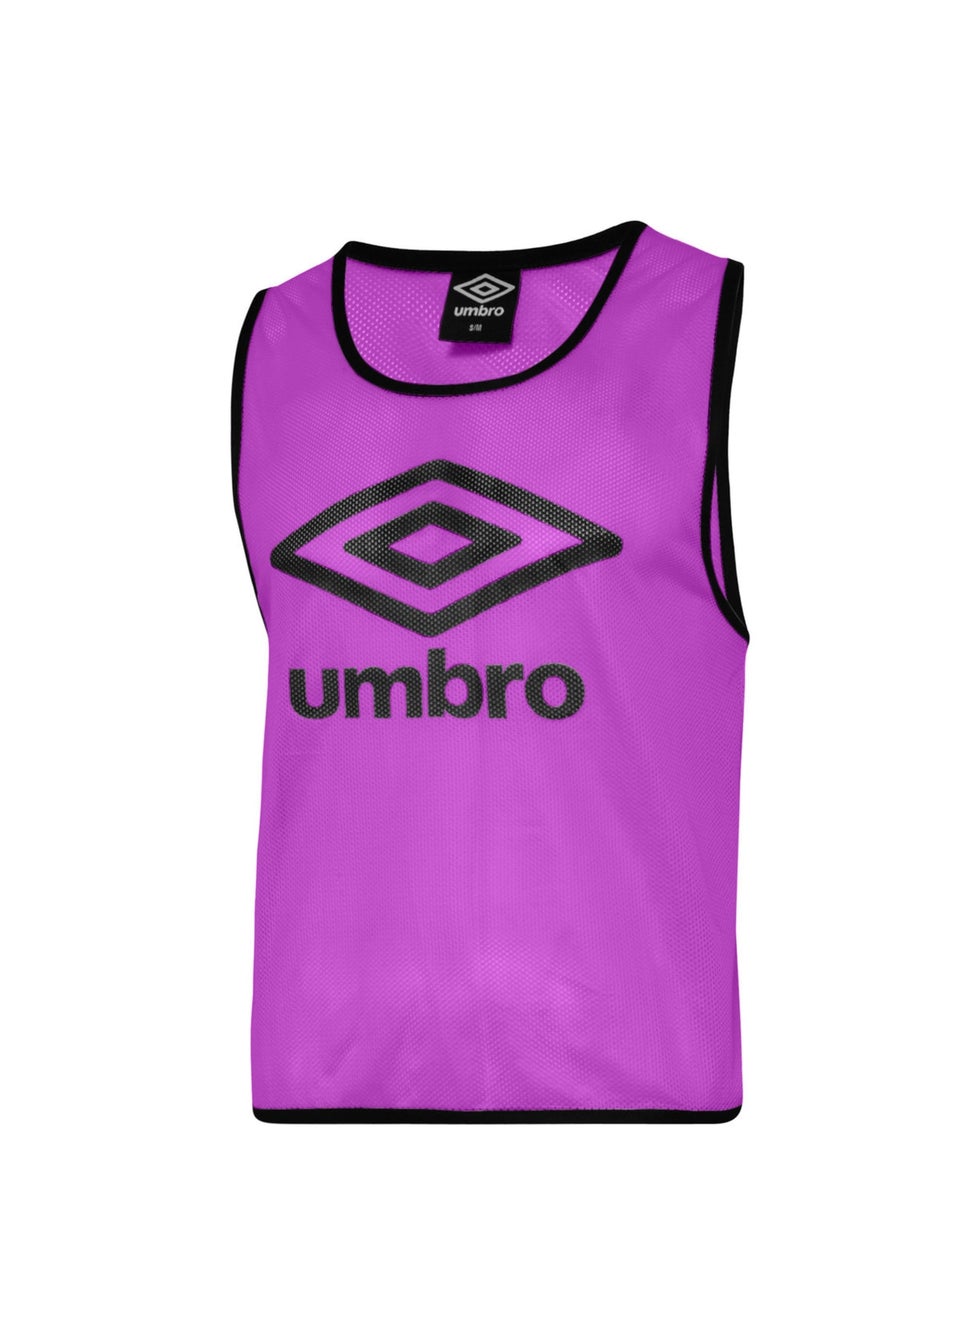 Umbro Kids Purple Training Bib